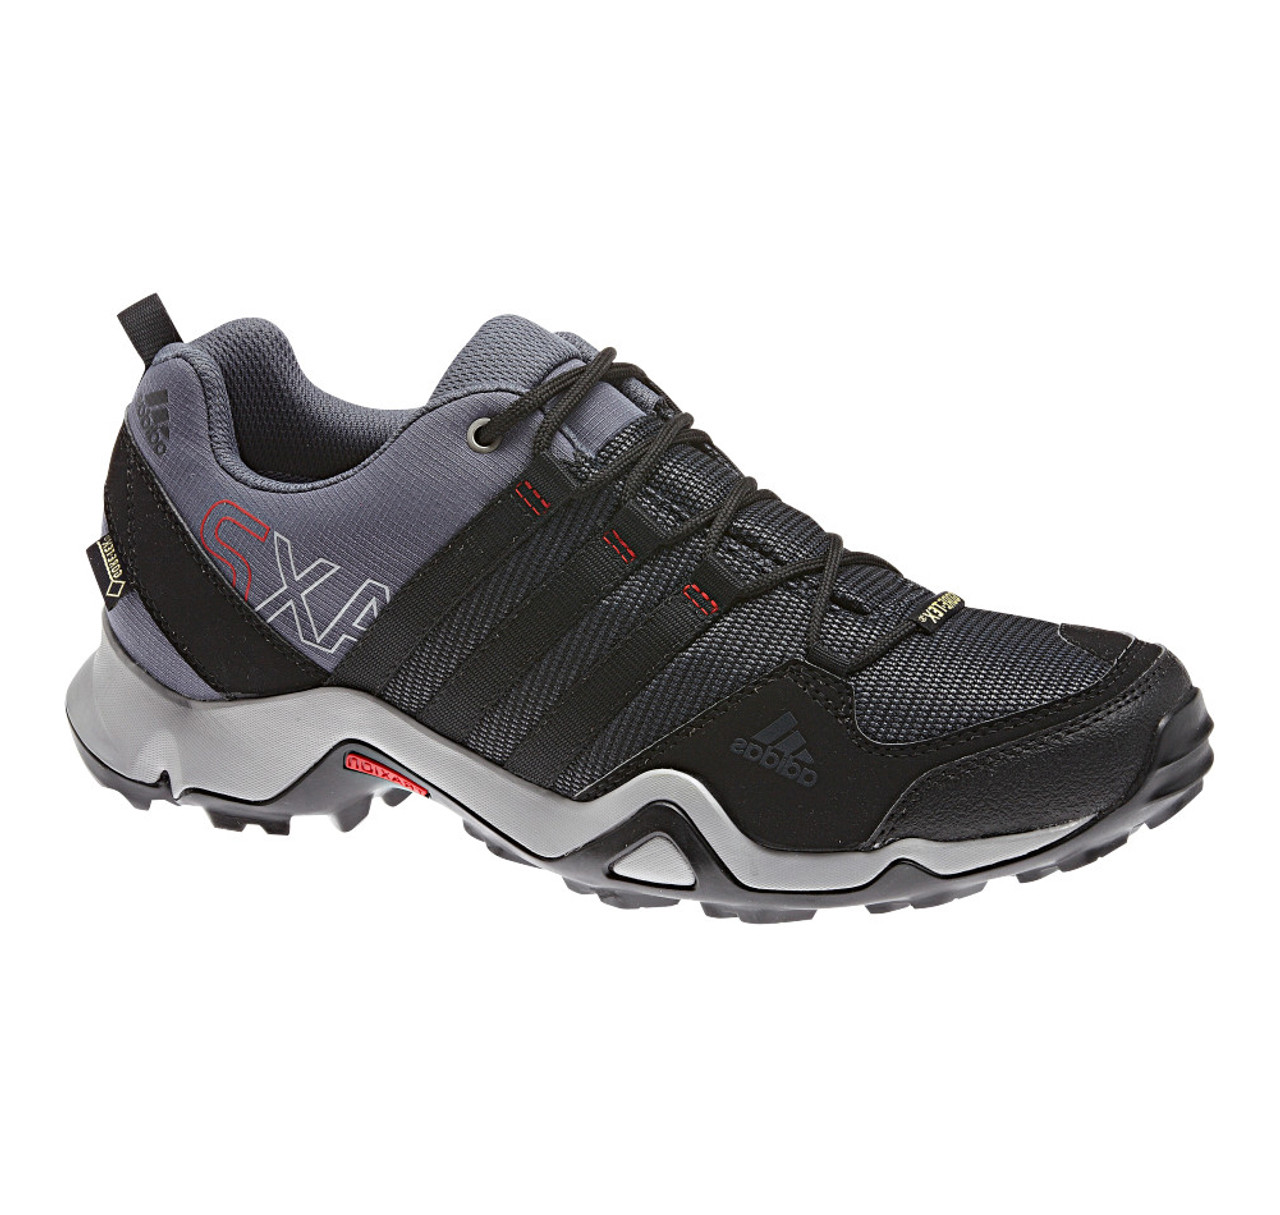 Adidas Men's 2 GTX Hiking Shoe - Black | Discount Adidas Men's Athletic Shoes & - Shoolu.com |